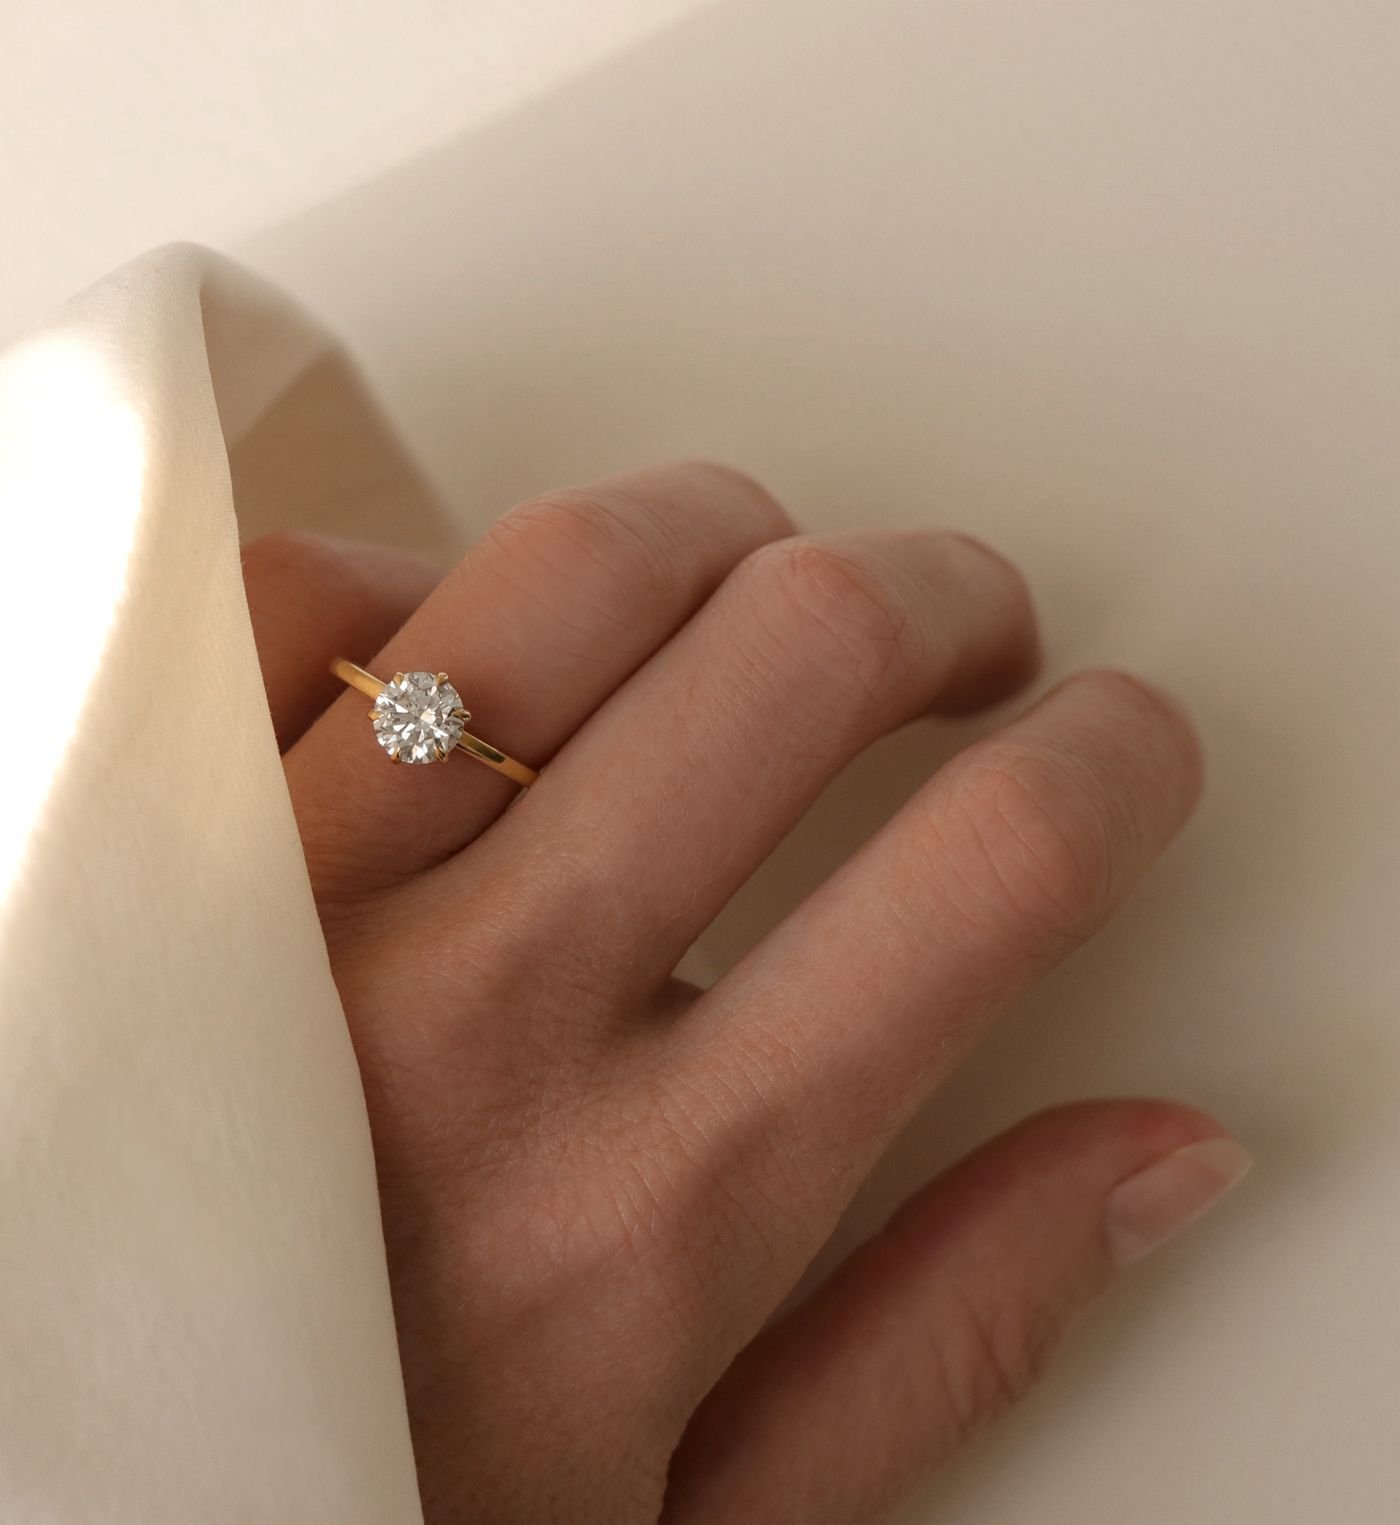 Красивое кольцо на пальце